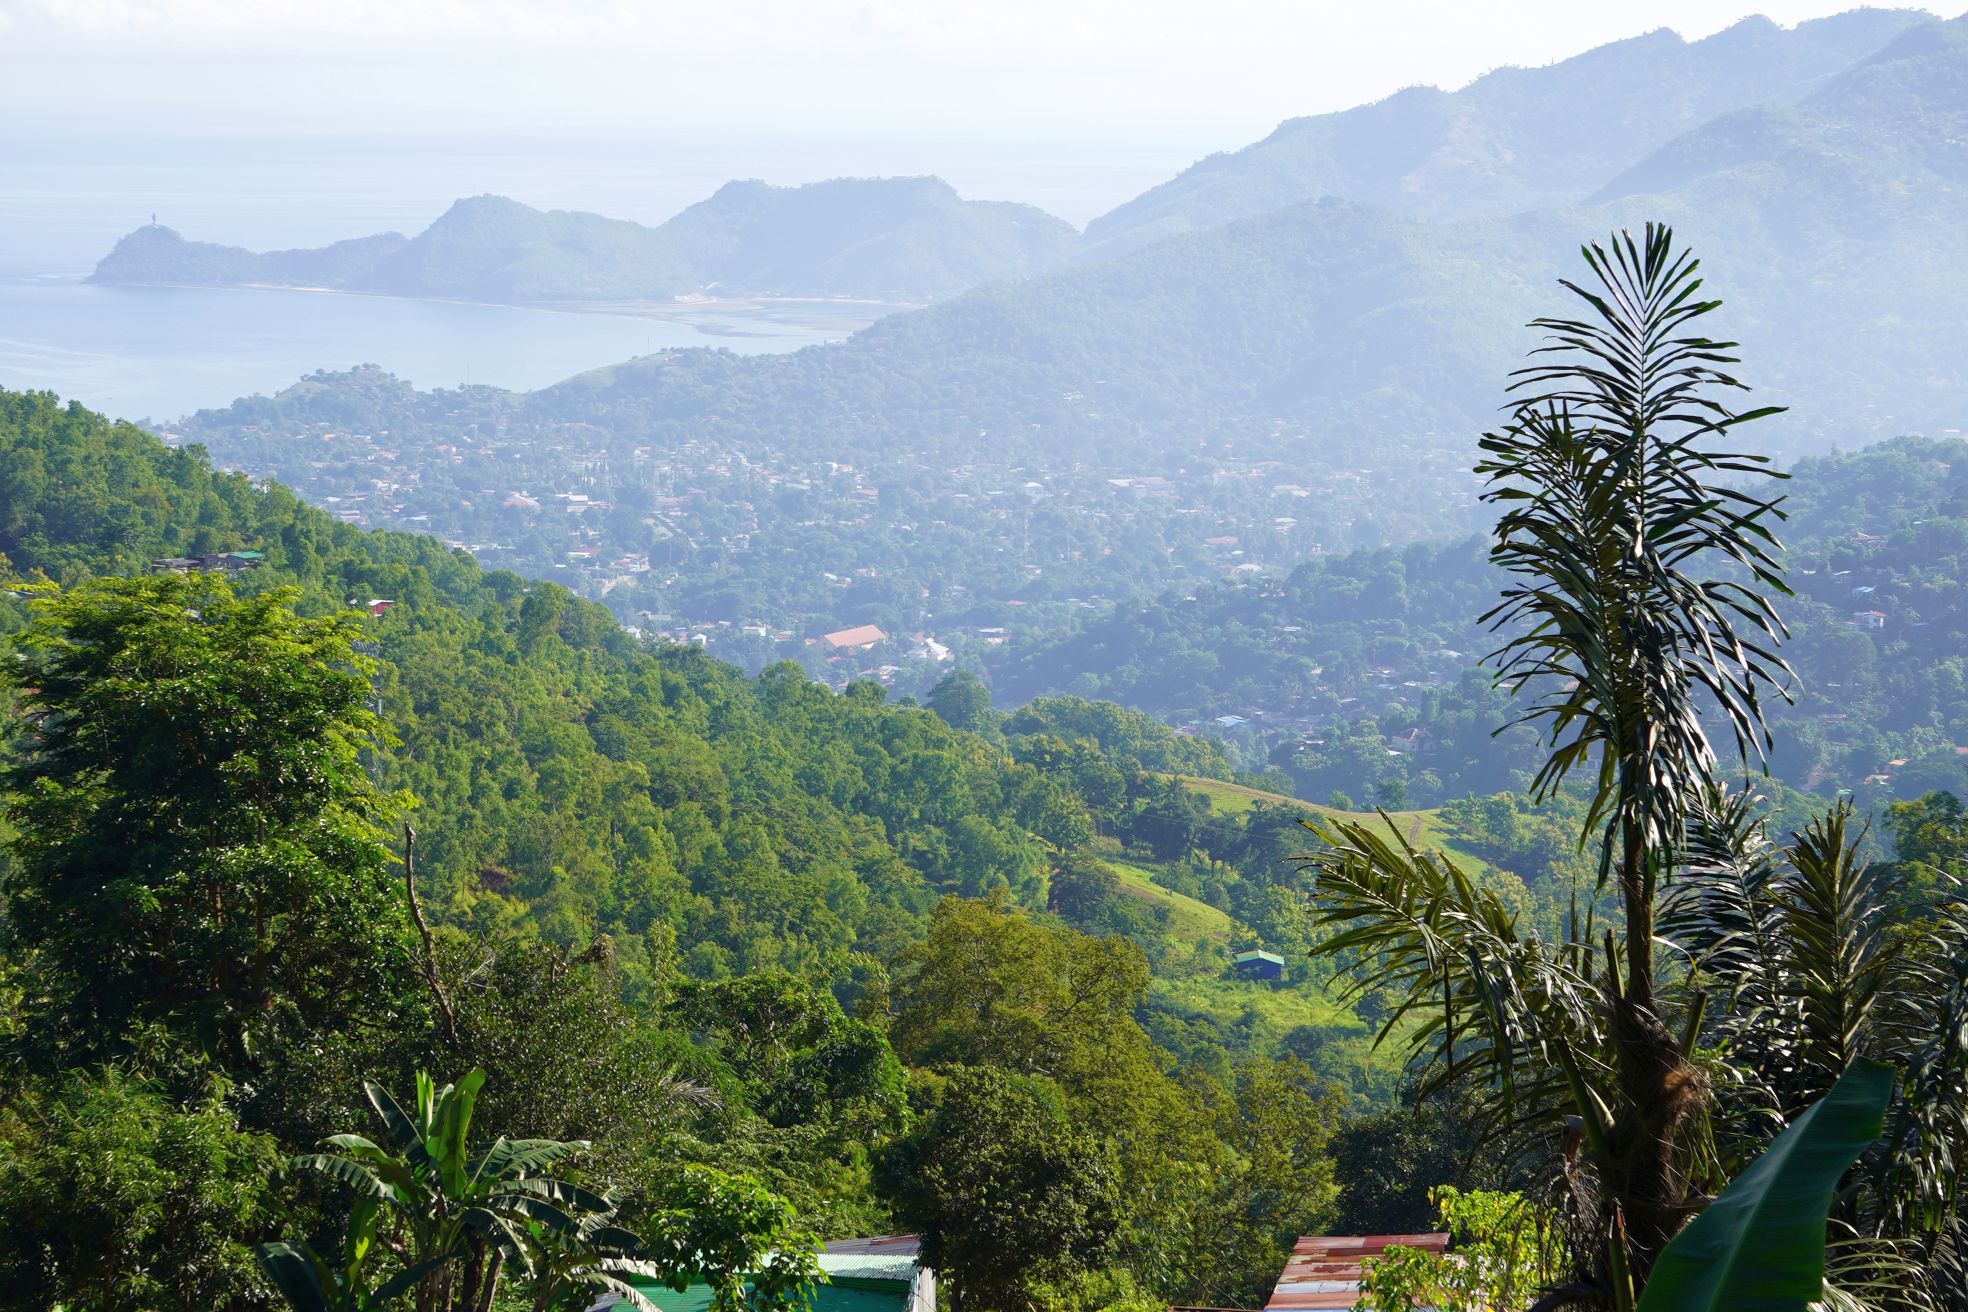 How did I end up volunteering in Timor-Leste?